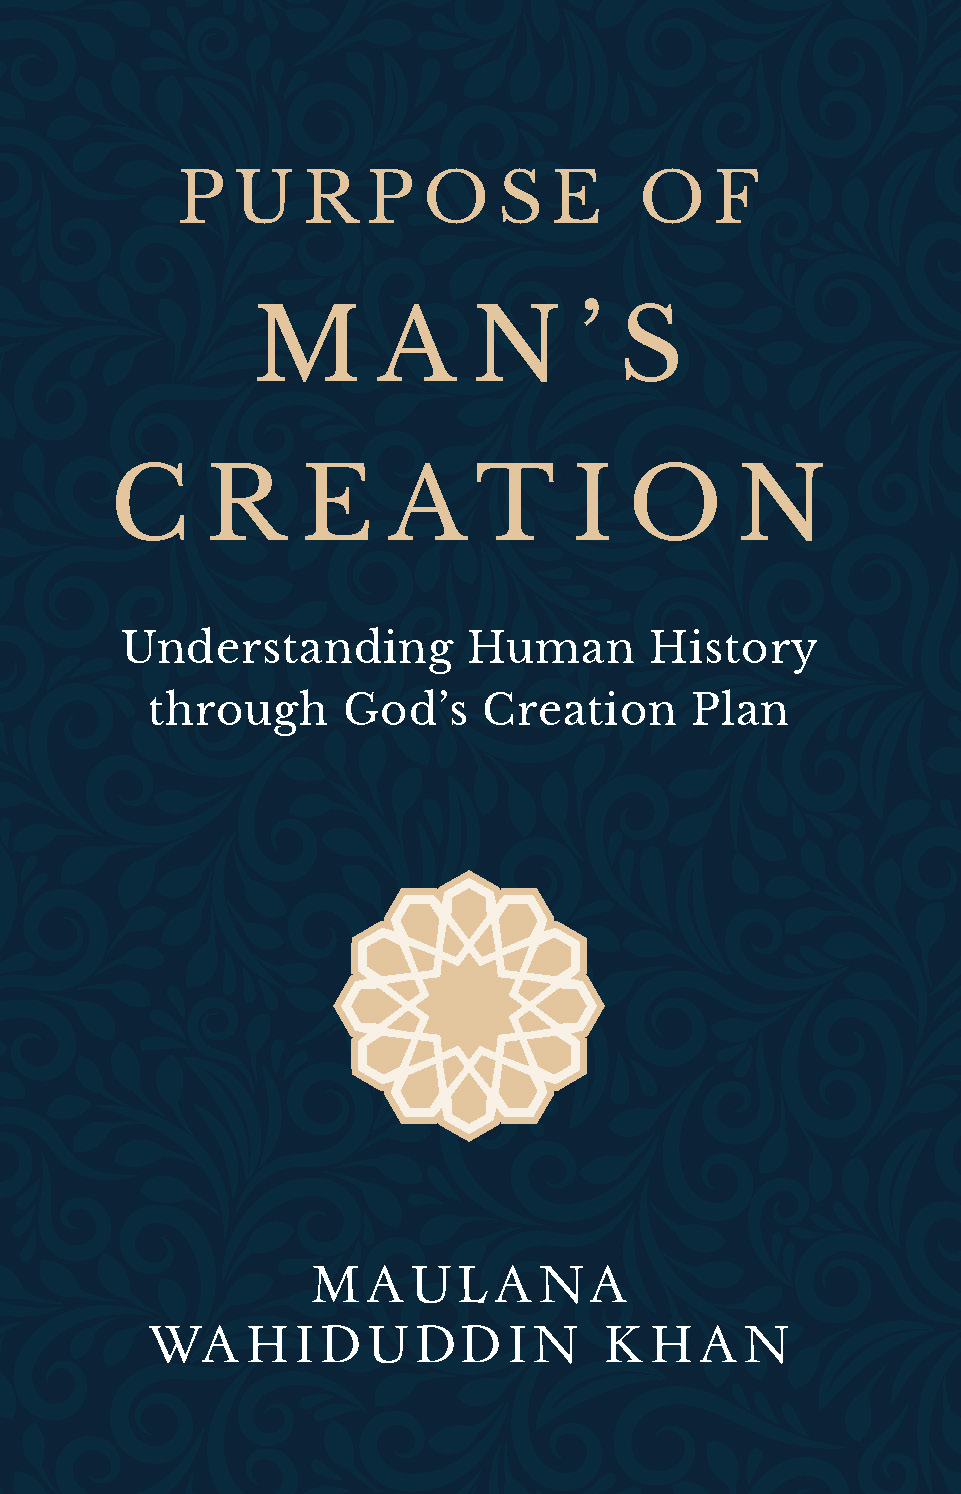 PURPOSE OF MAN'S CREATION